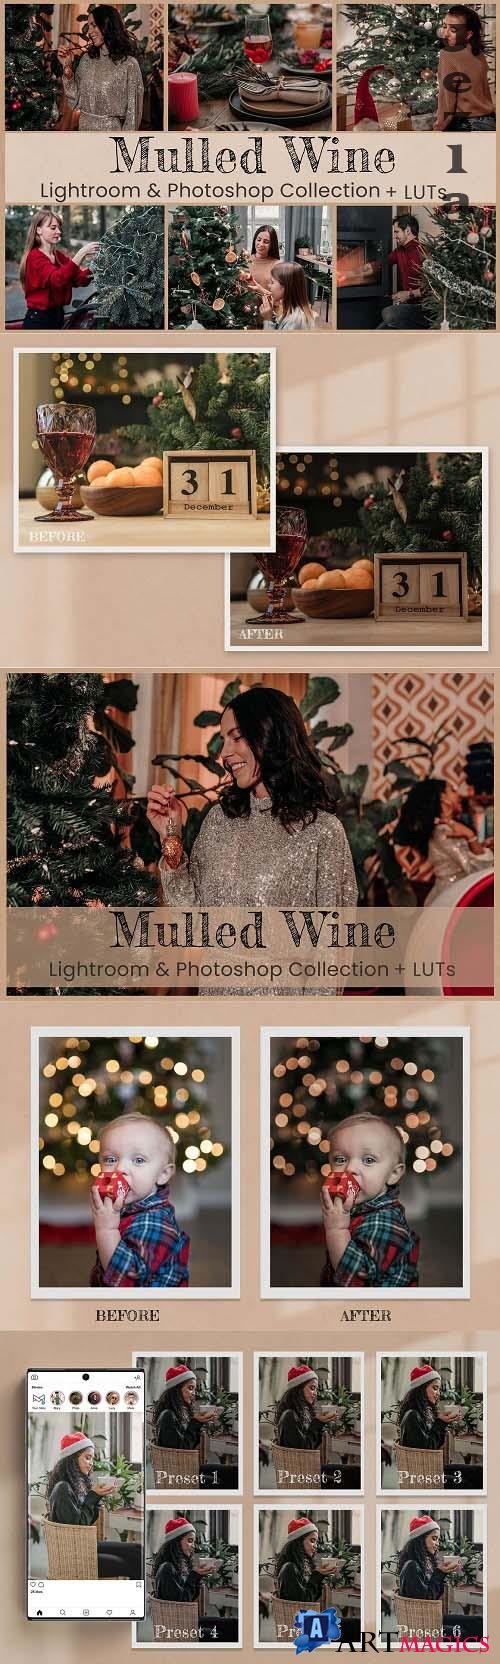 Mulled Wine Lightroom Photoshop LUTs - 6577444